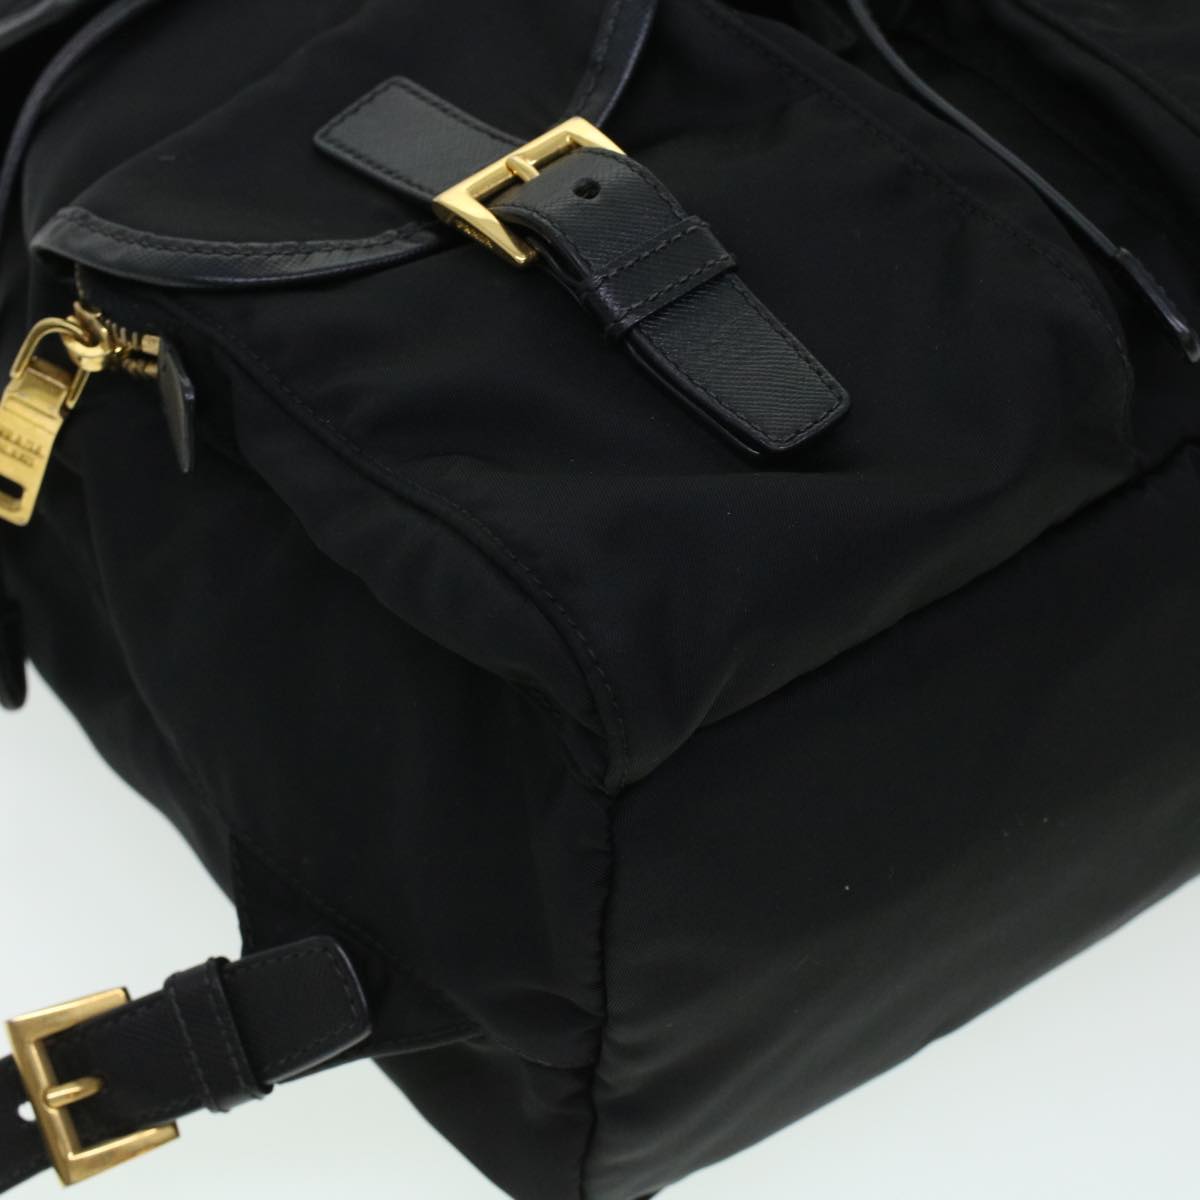 PRADA Backpack Nylon Black Auth 44760